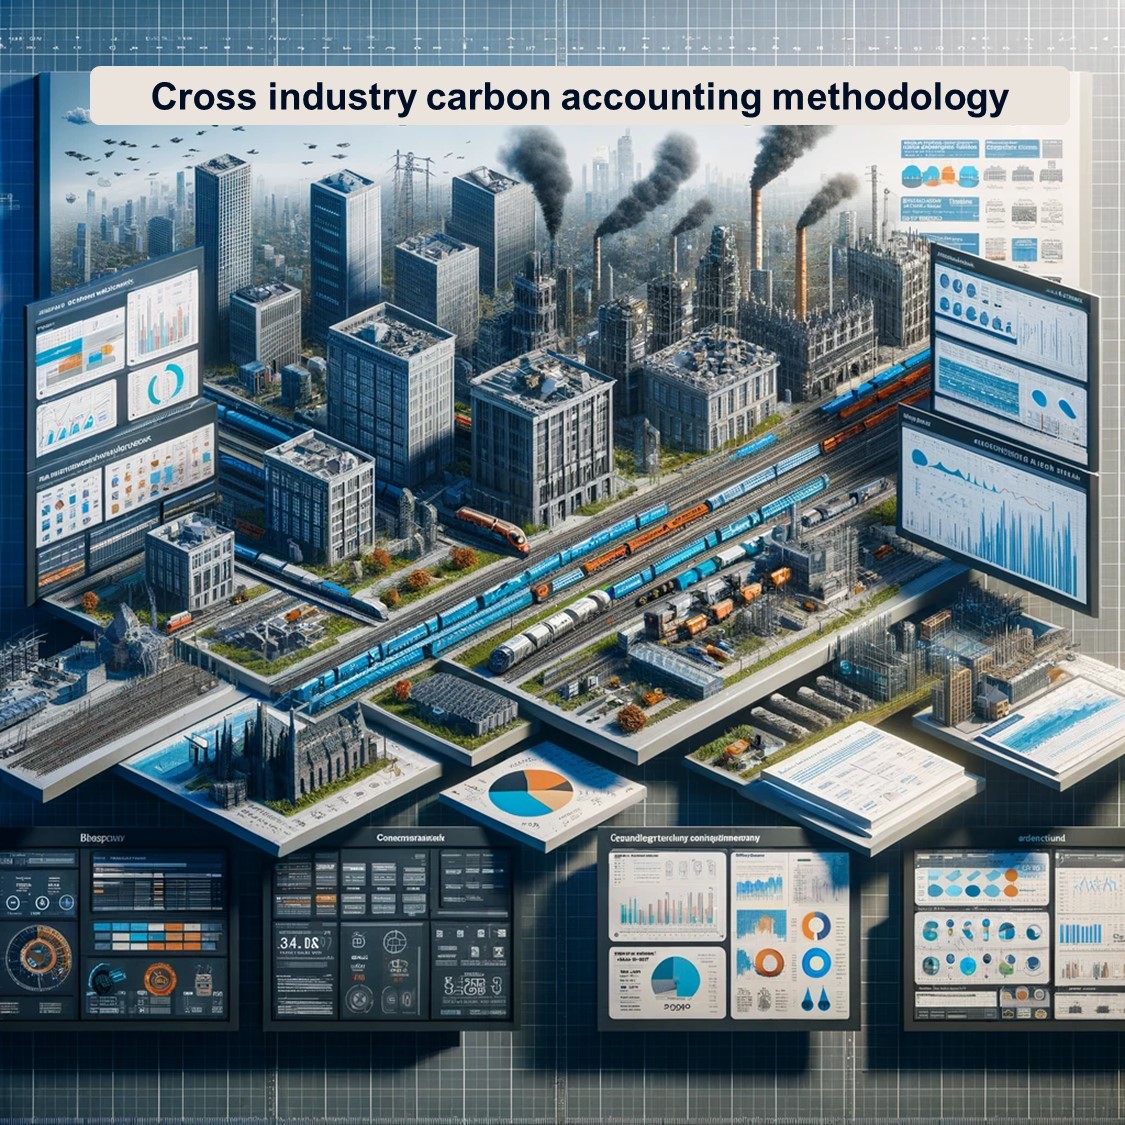 Cross-industry carbon accounting methodology visual representation